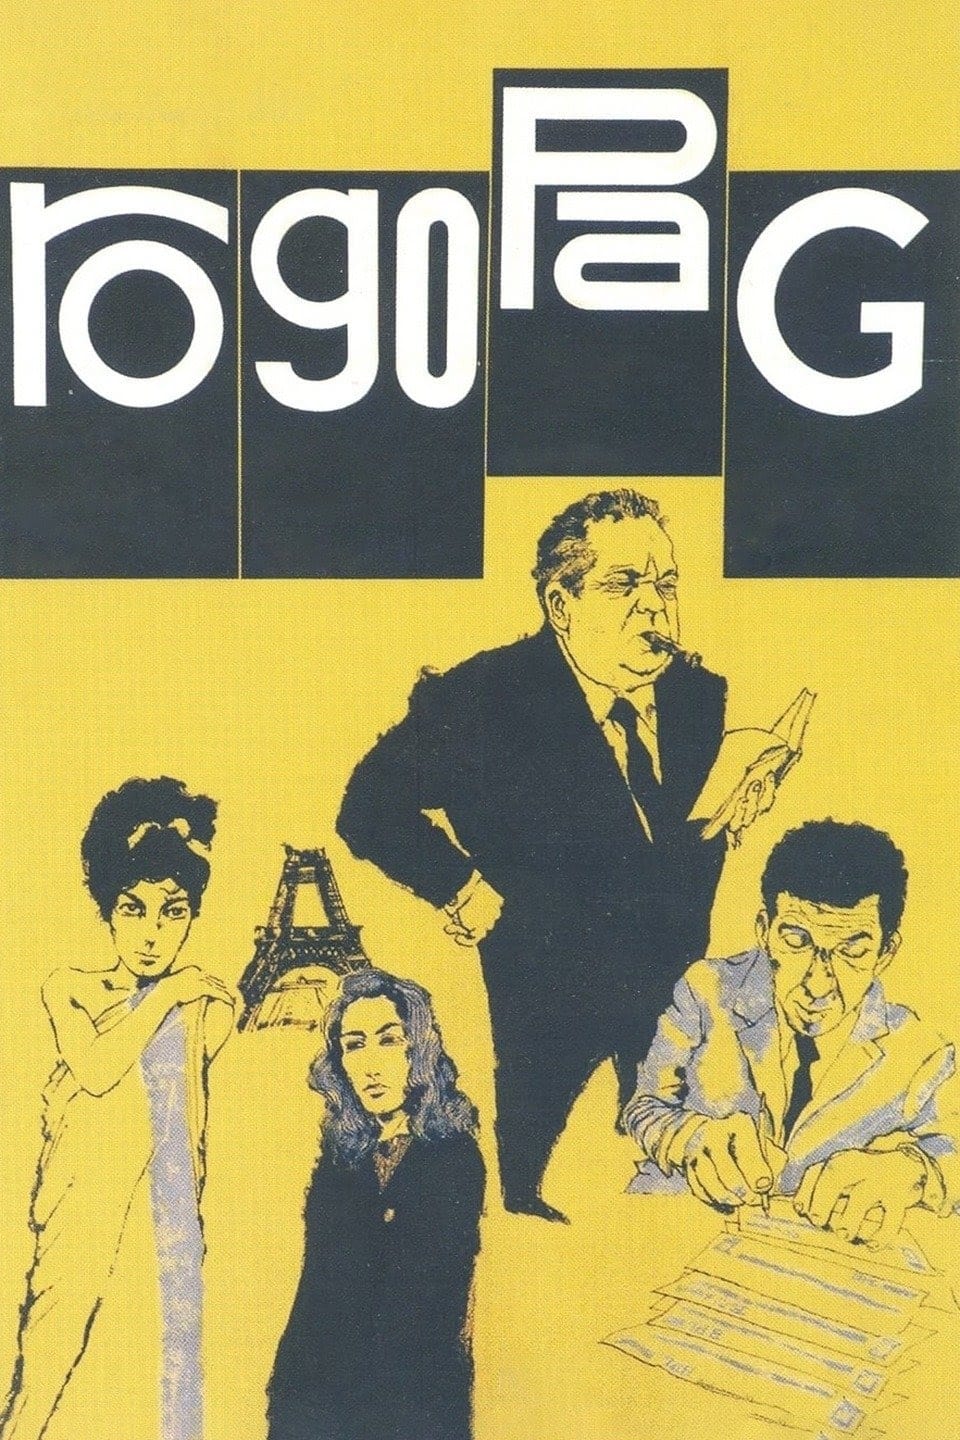 Rogopag (1963)